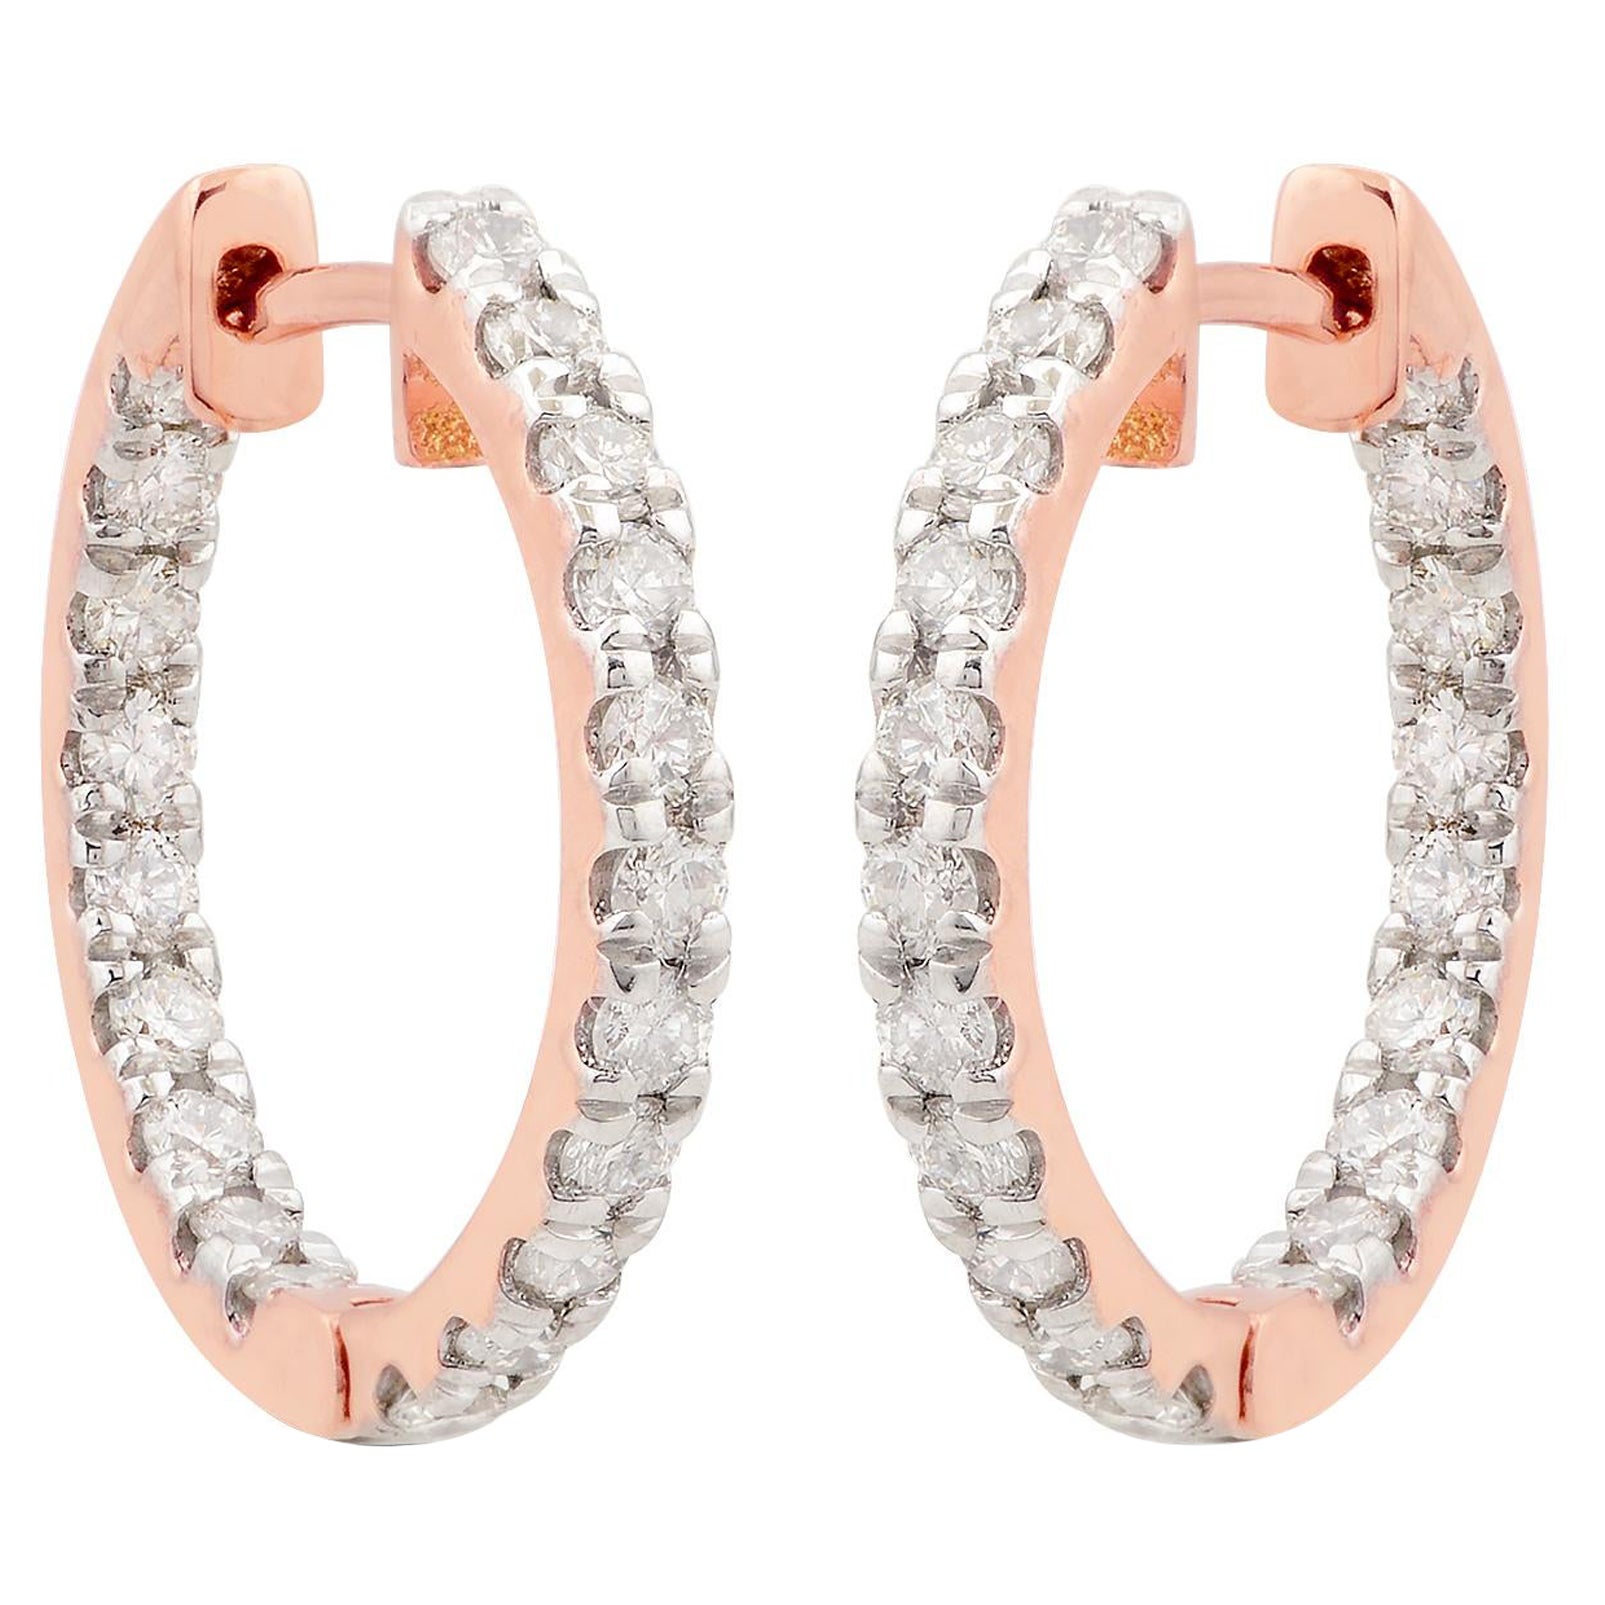 1.07 Carat SI Clarity HI Color Diamond Pave Hoop Earrings 10k Rose Gold Jewelry